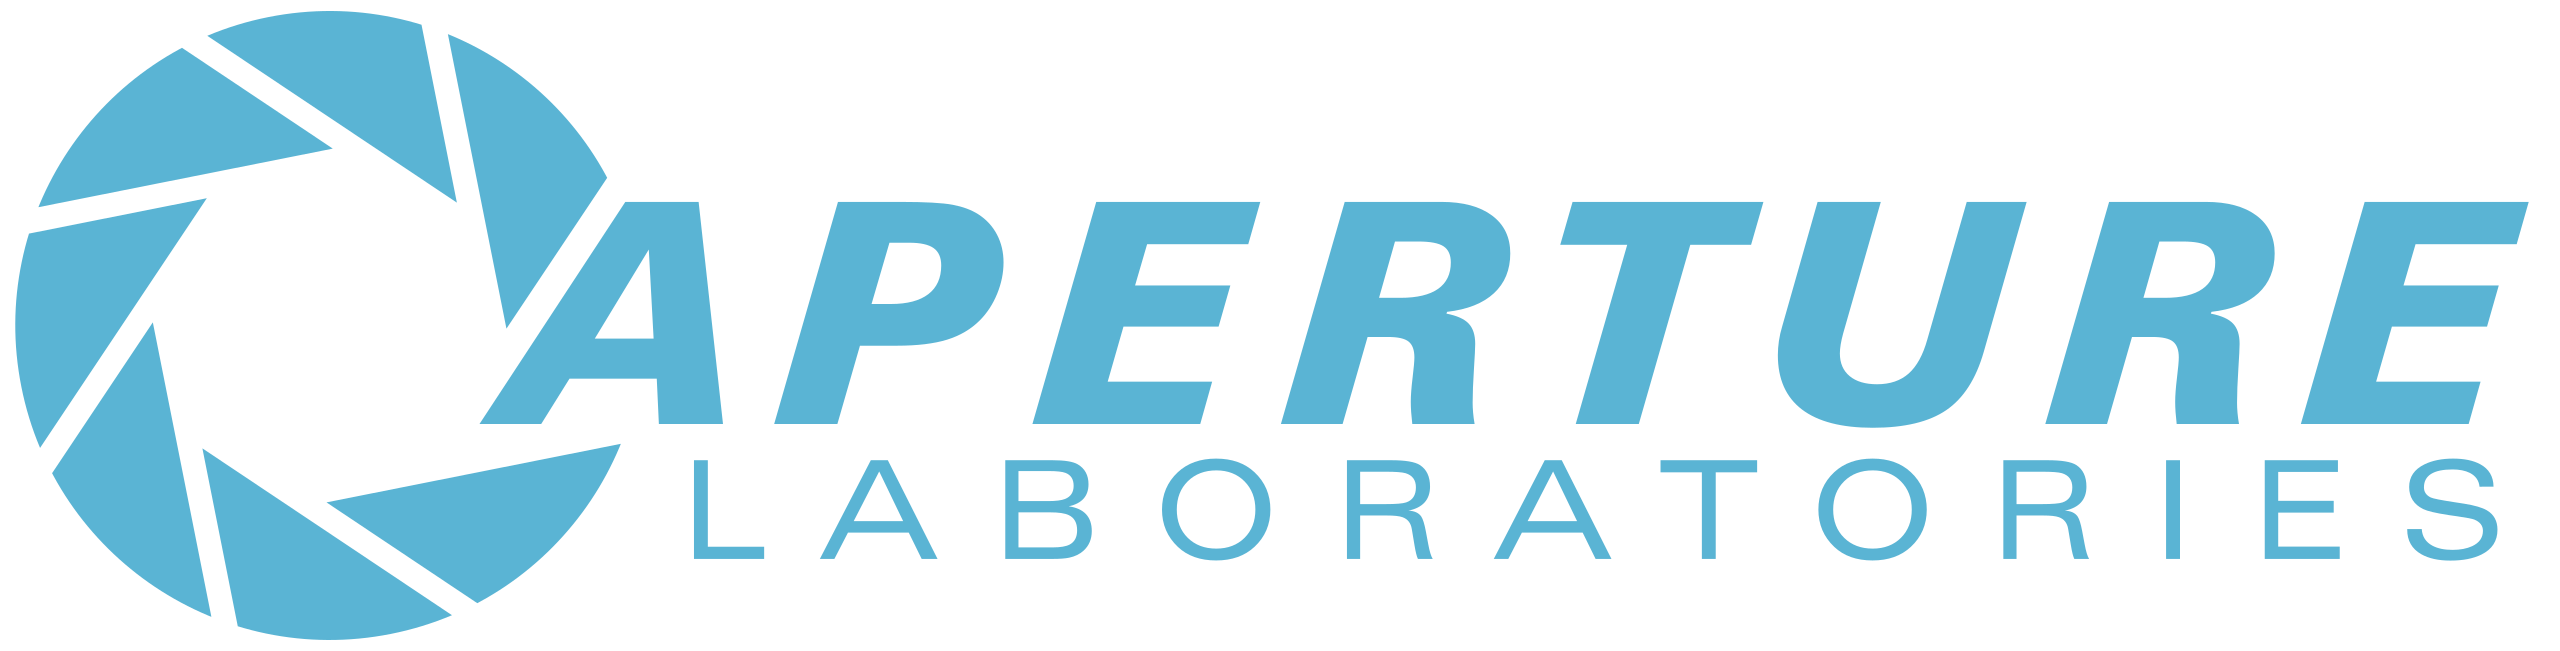 Blue Aperture Laboratories logo